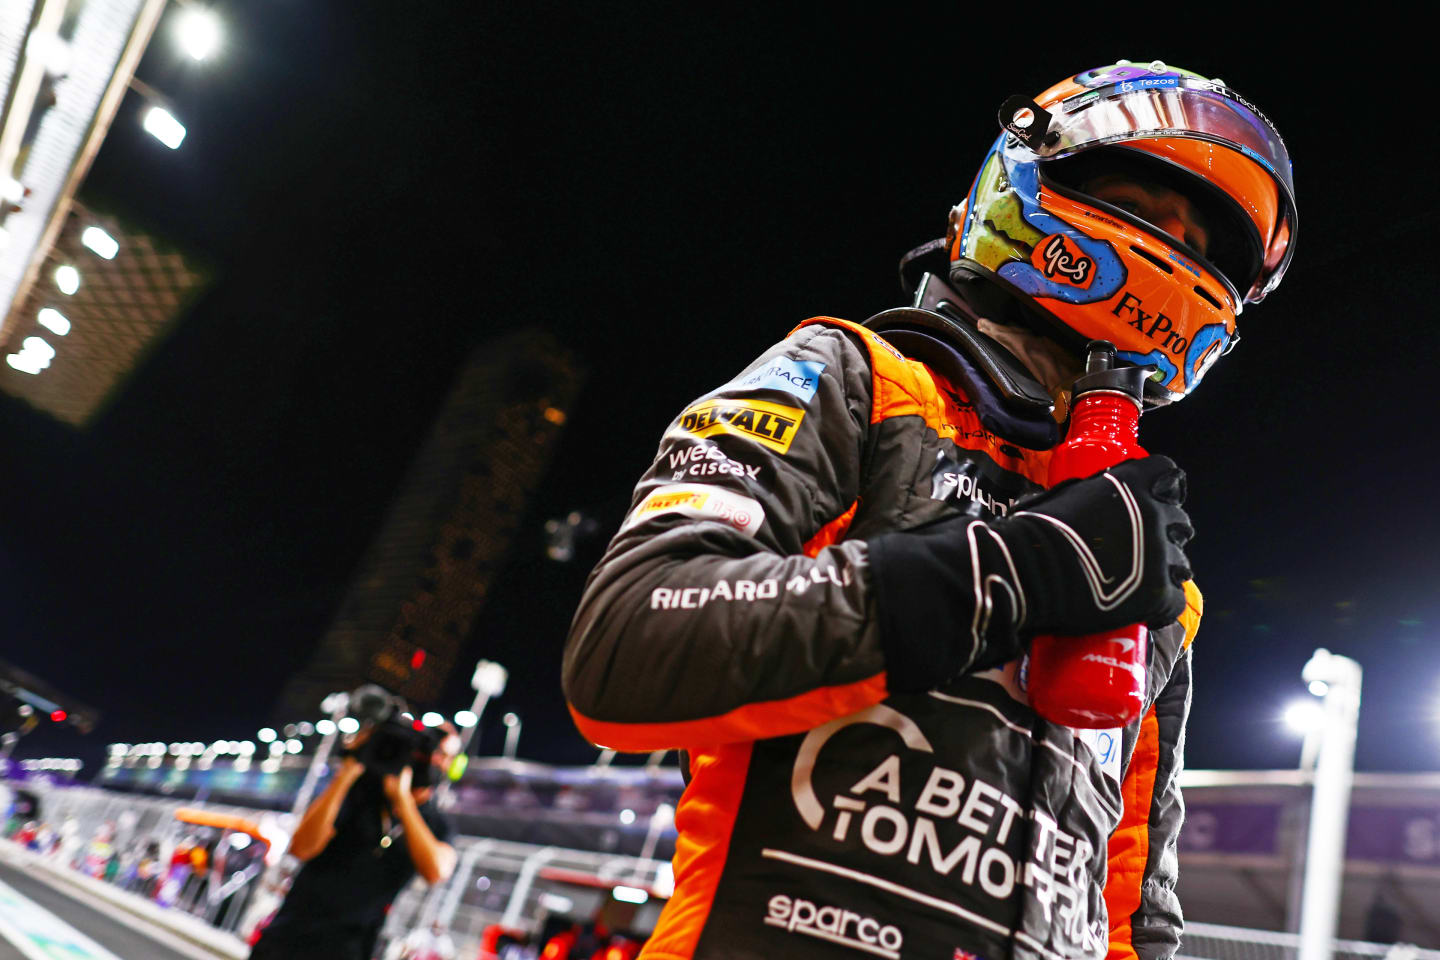 JEDDAH, SAUDI ARABIA - MARCH 26: Daniel Ricciardo of Australia and McLaren walks in the Pitlane